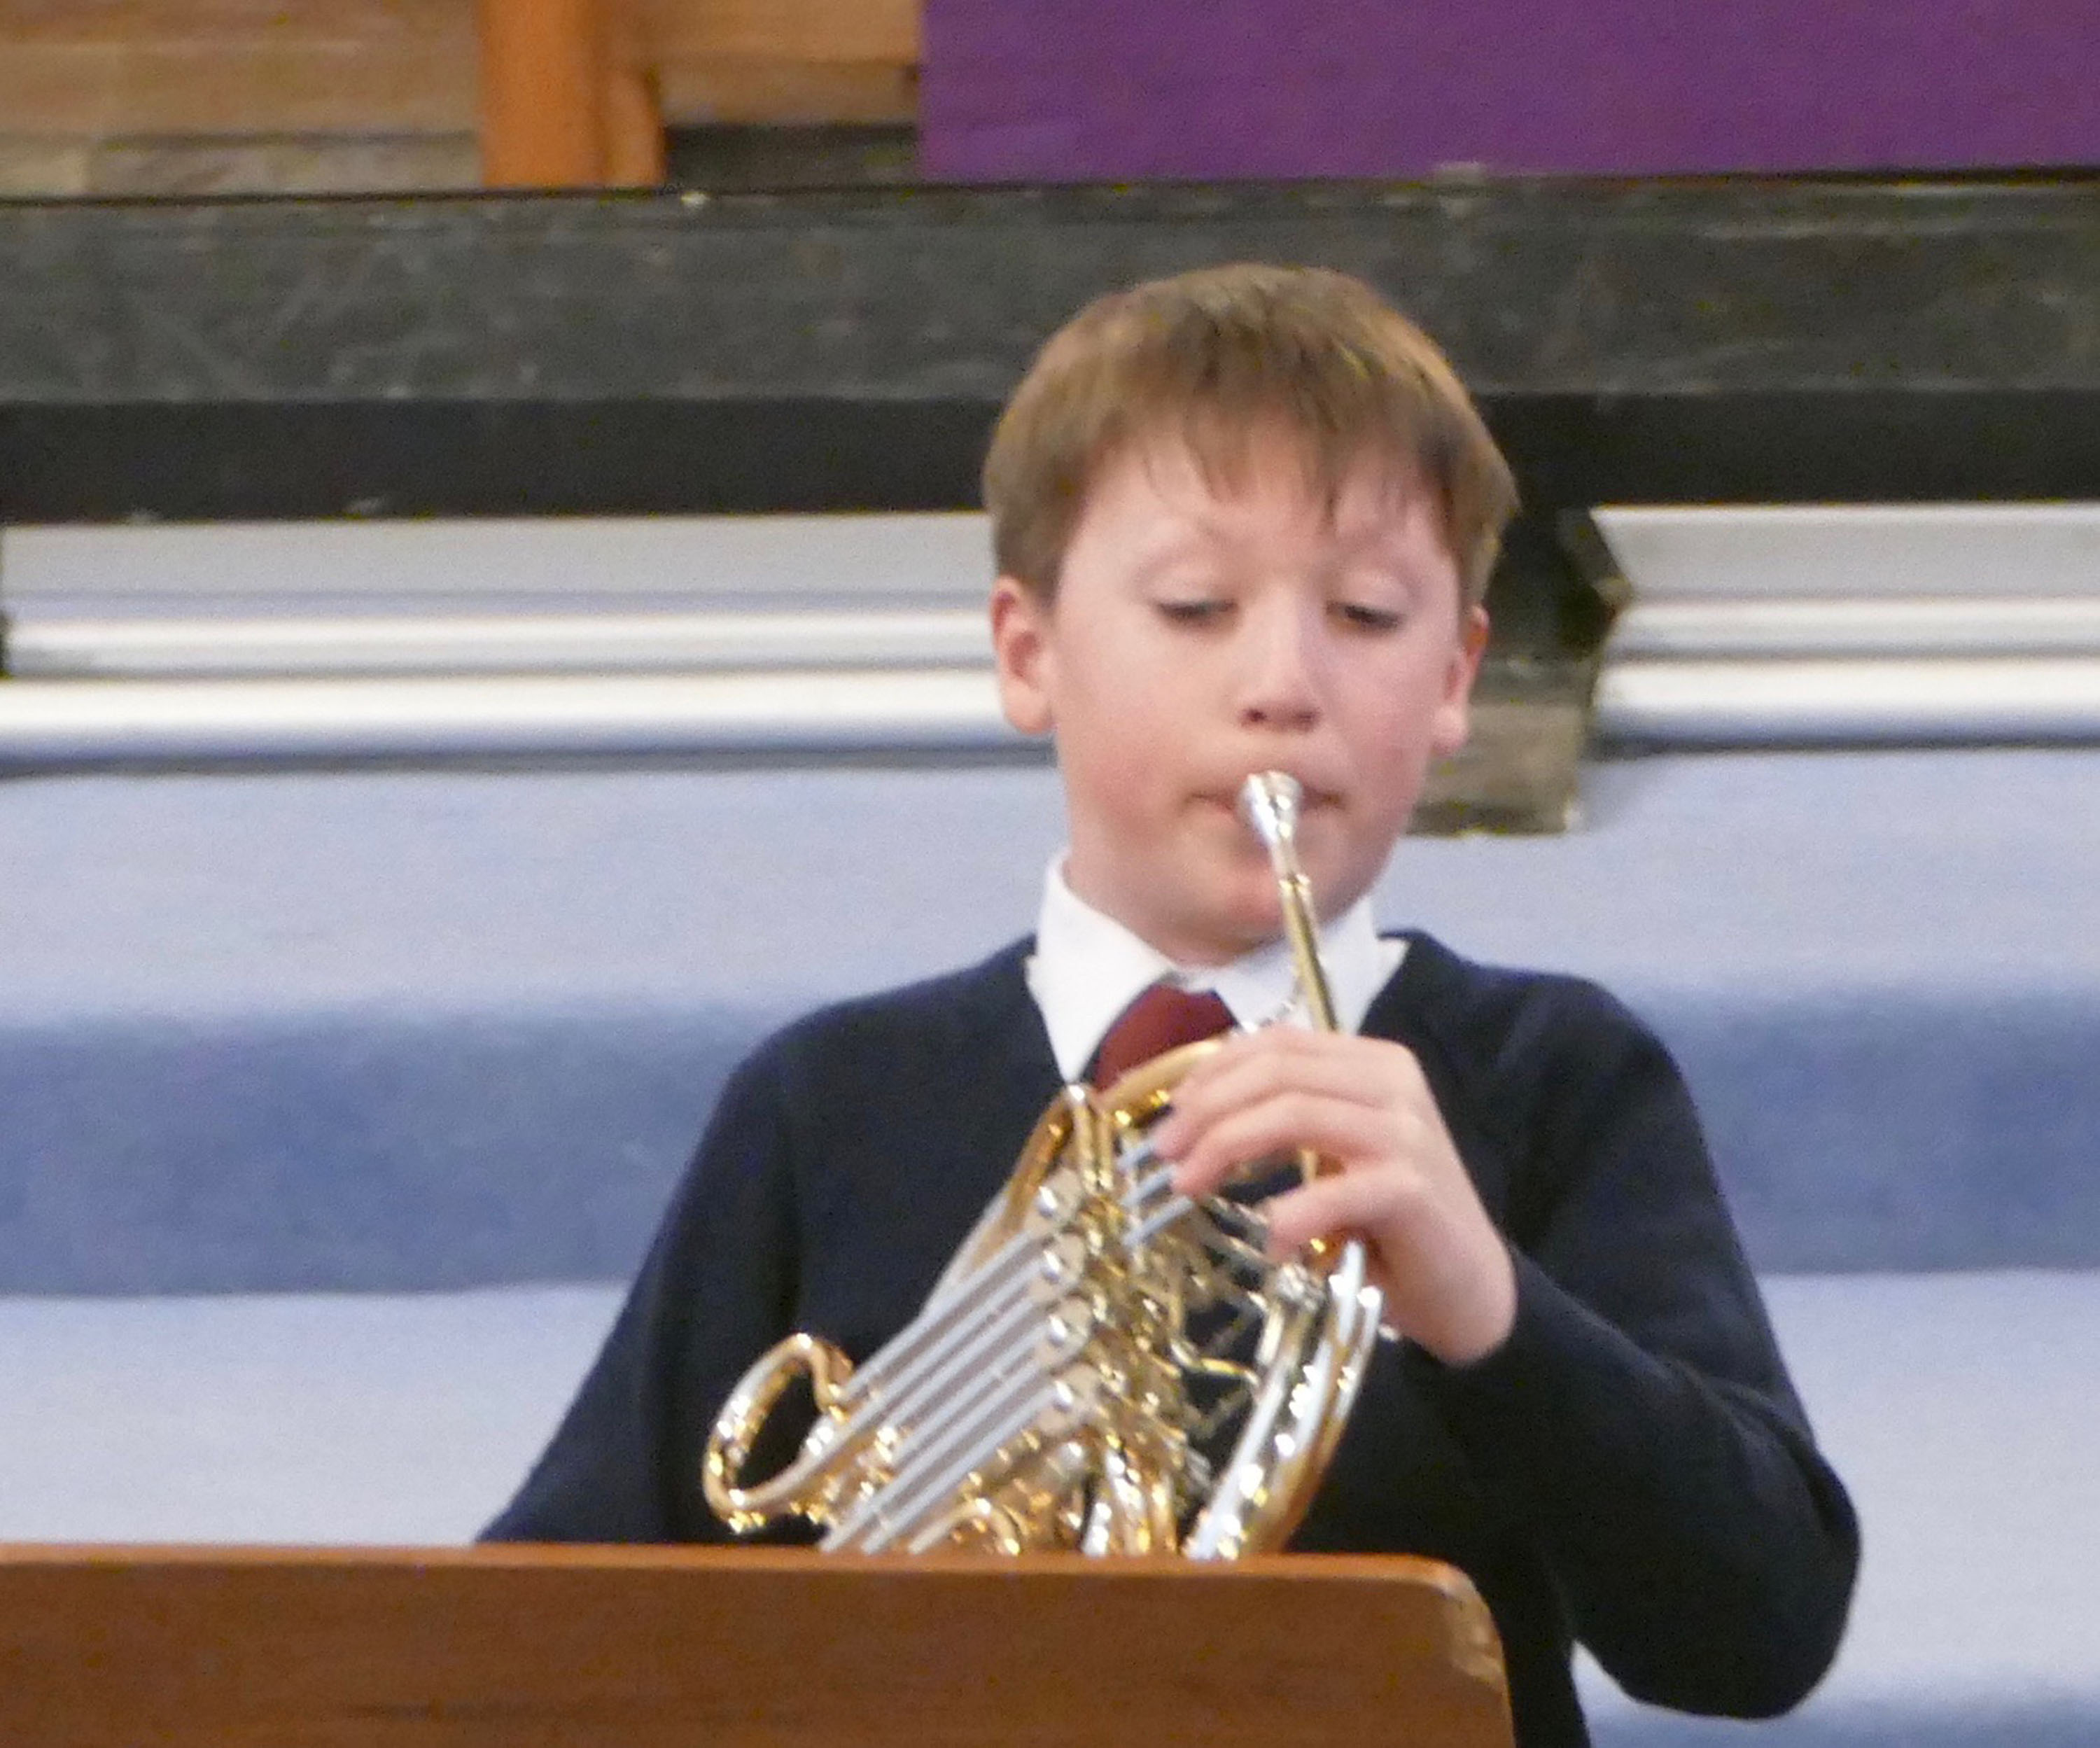 Prep School Brass Informal Concert, 21st March 2017